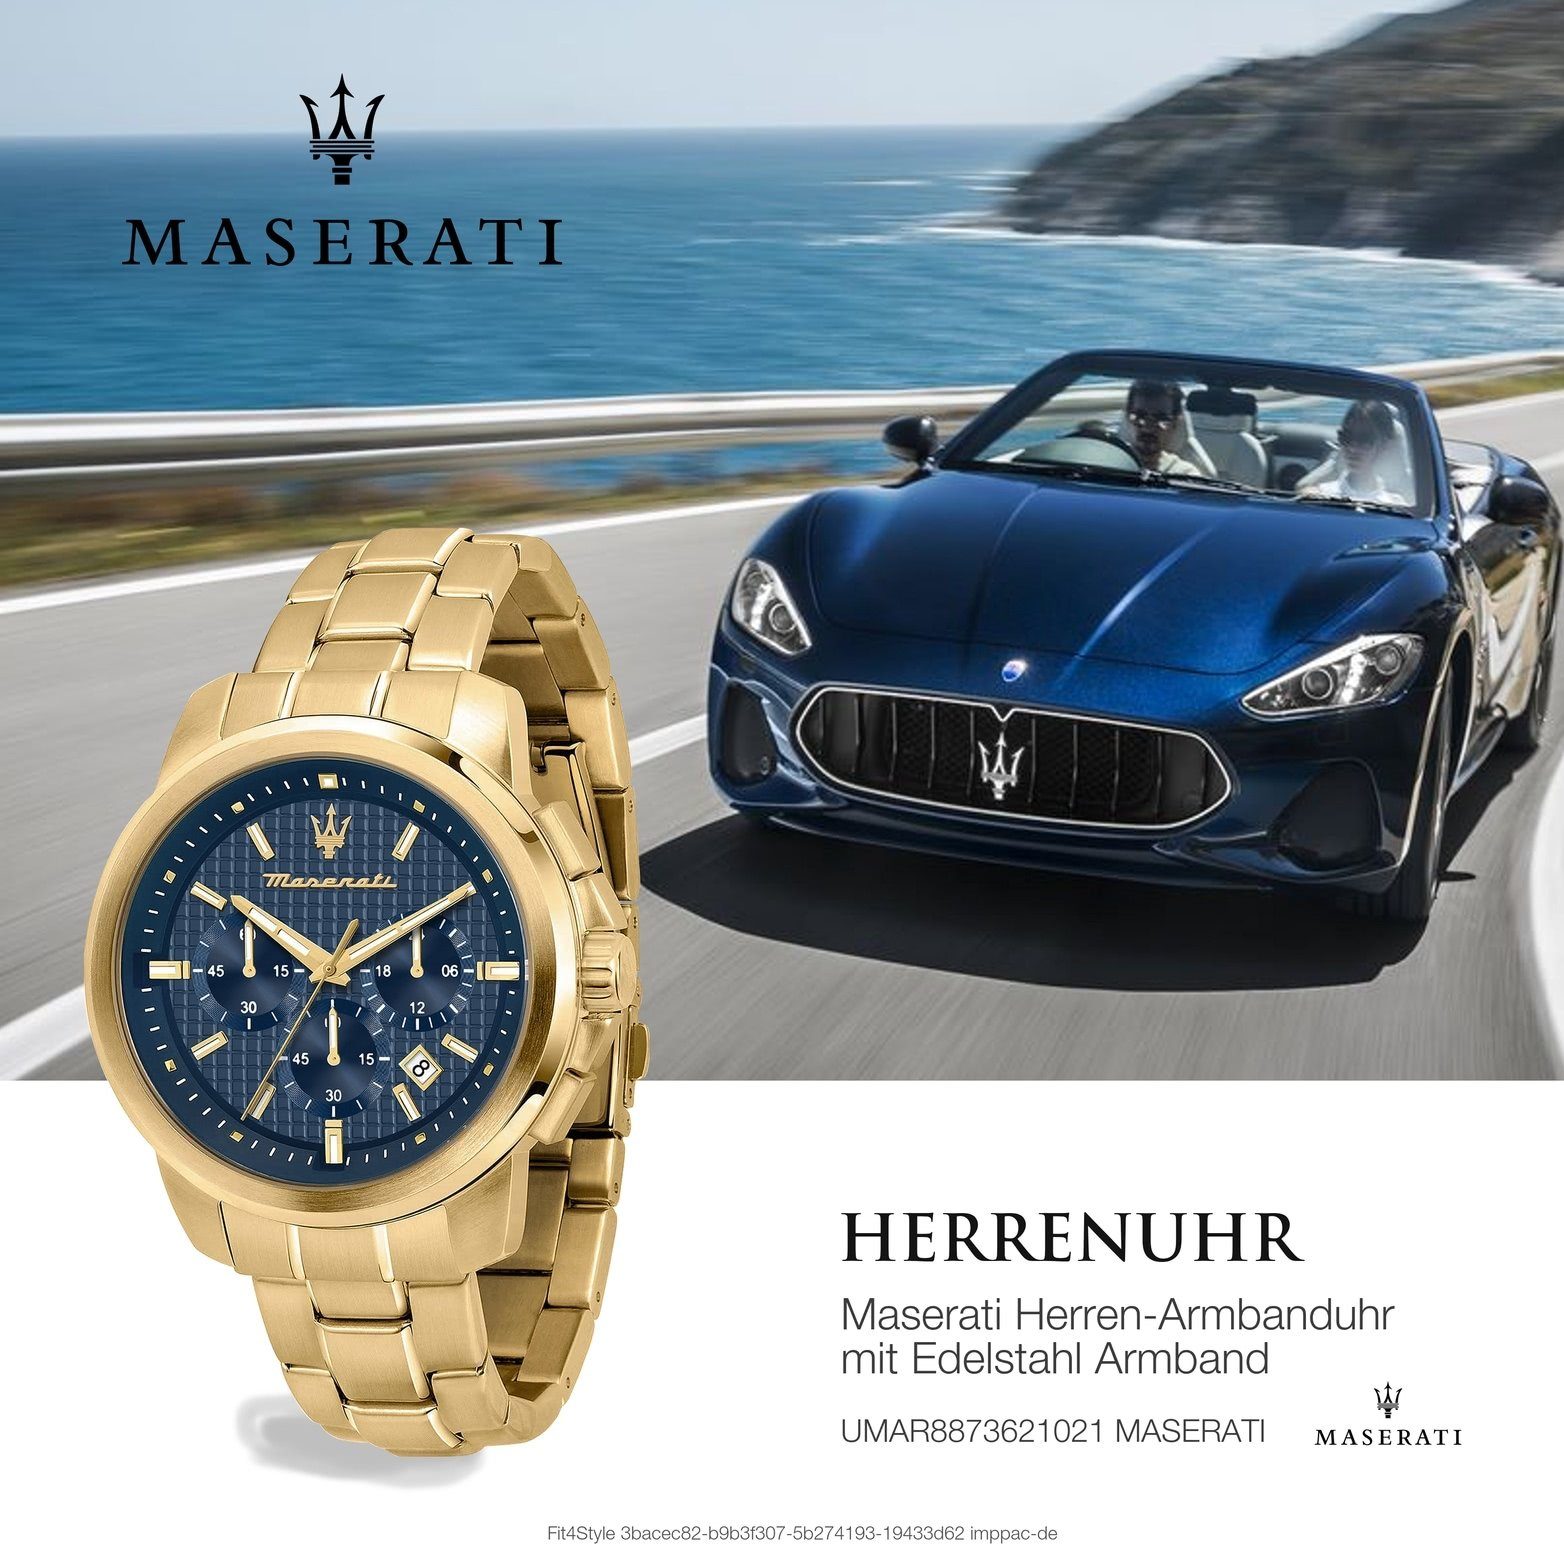 MASERATI Chronograph Maserati Edelstahl Edelstahlarmband, blau groß (ca. rundes 44mm) Armband-Uhr, Herrenuhr Gehäuse